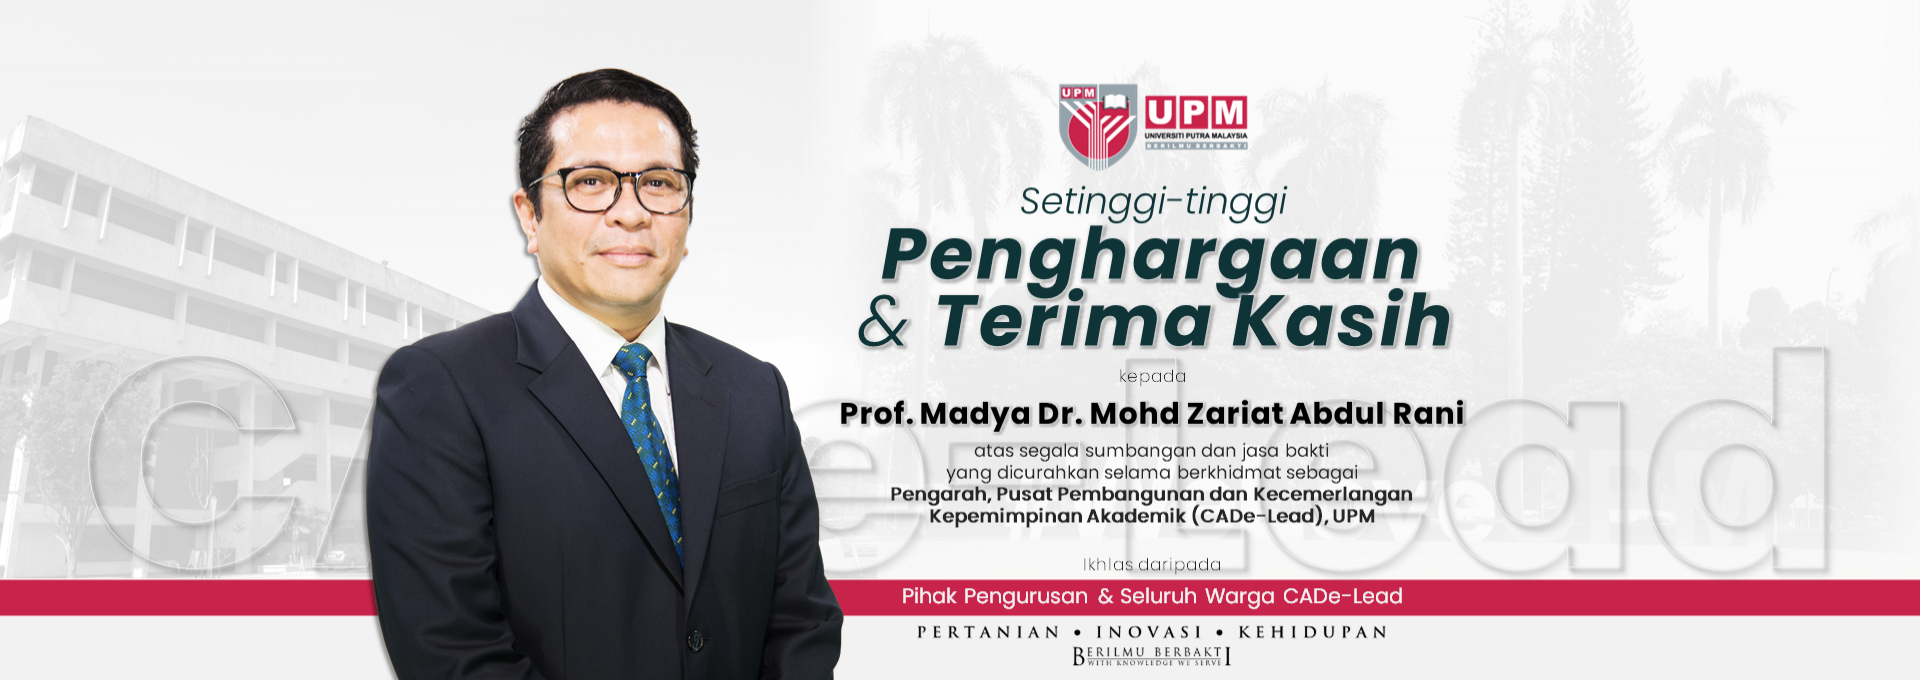 Thank you Assoc. Prof. Dr. Mohd Zariat Abdul Rani